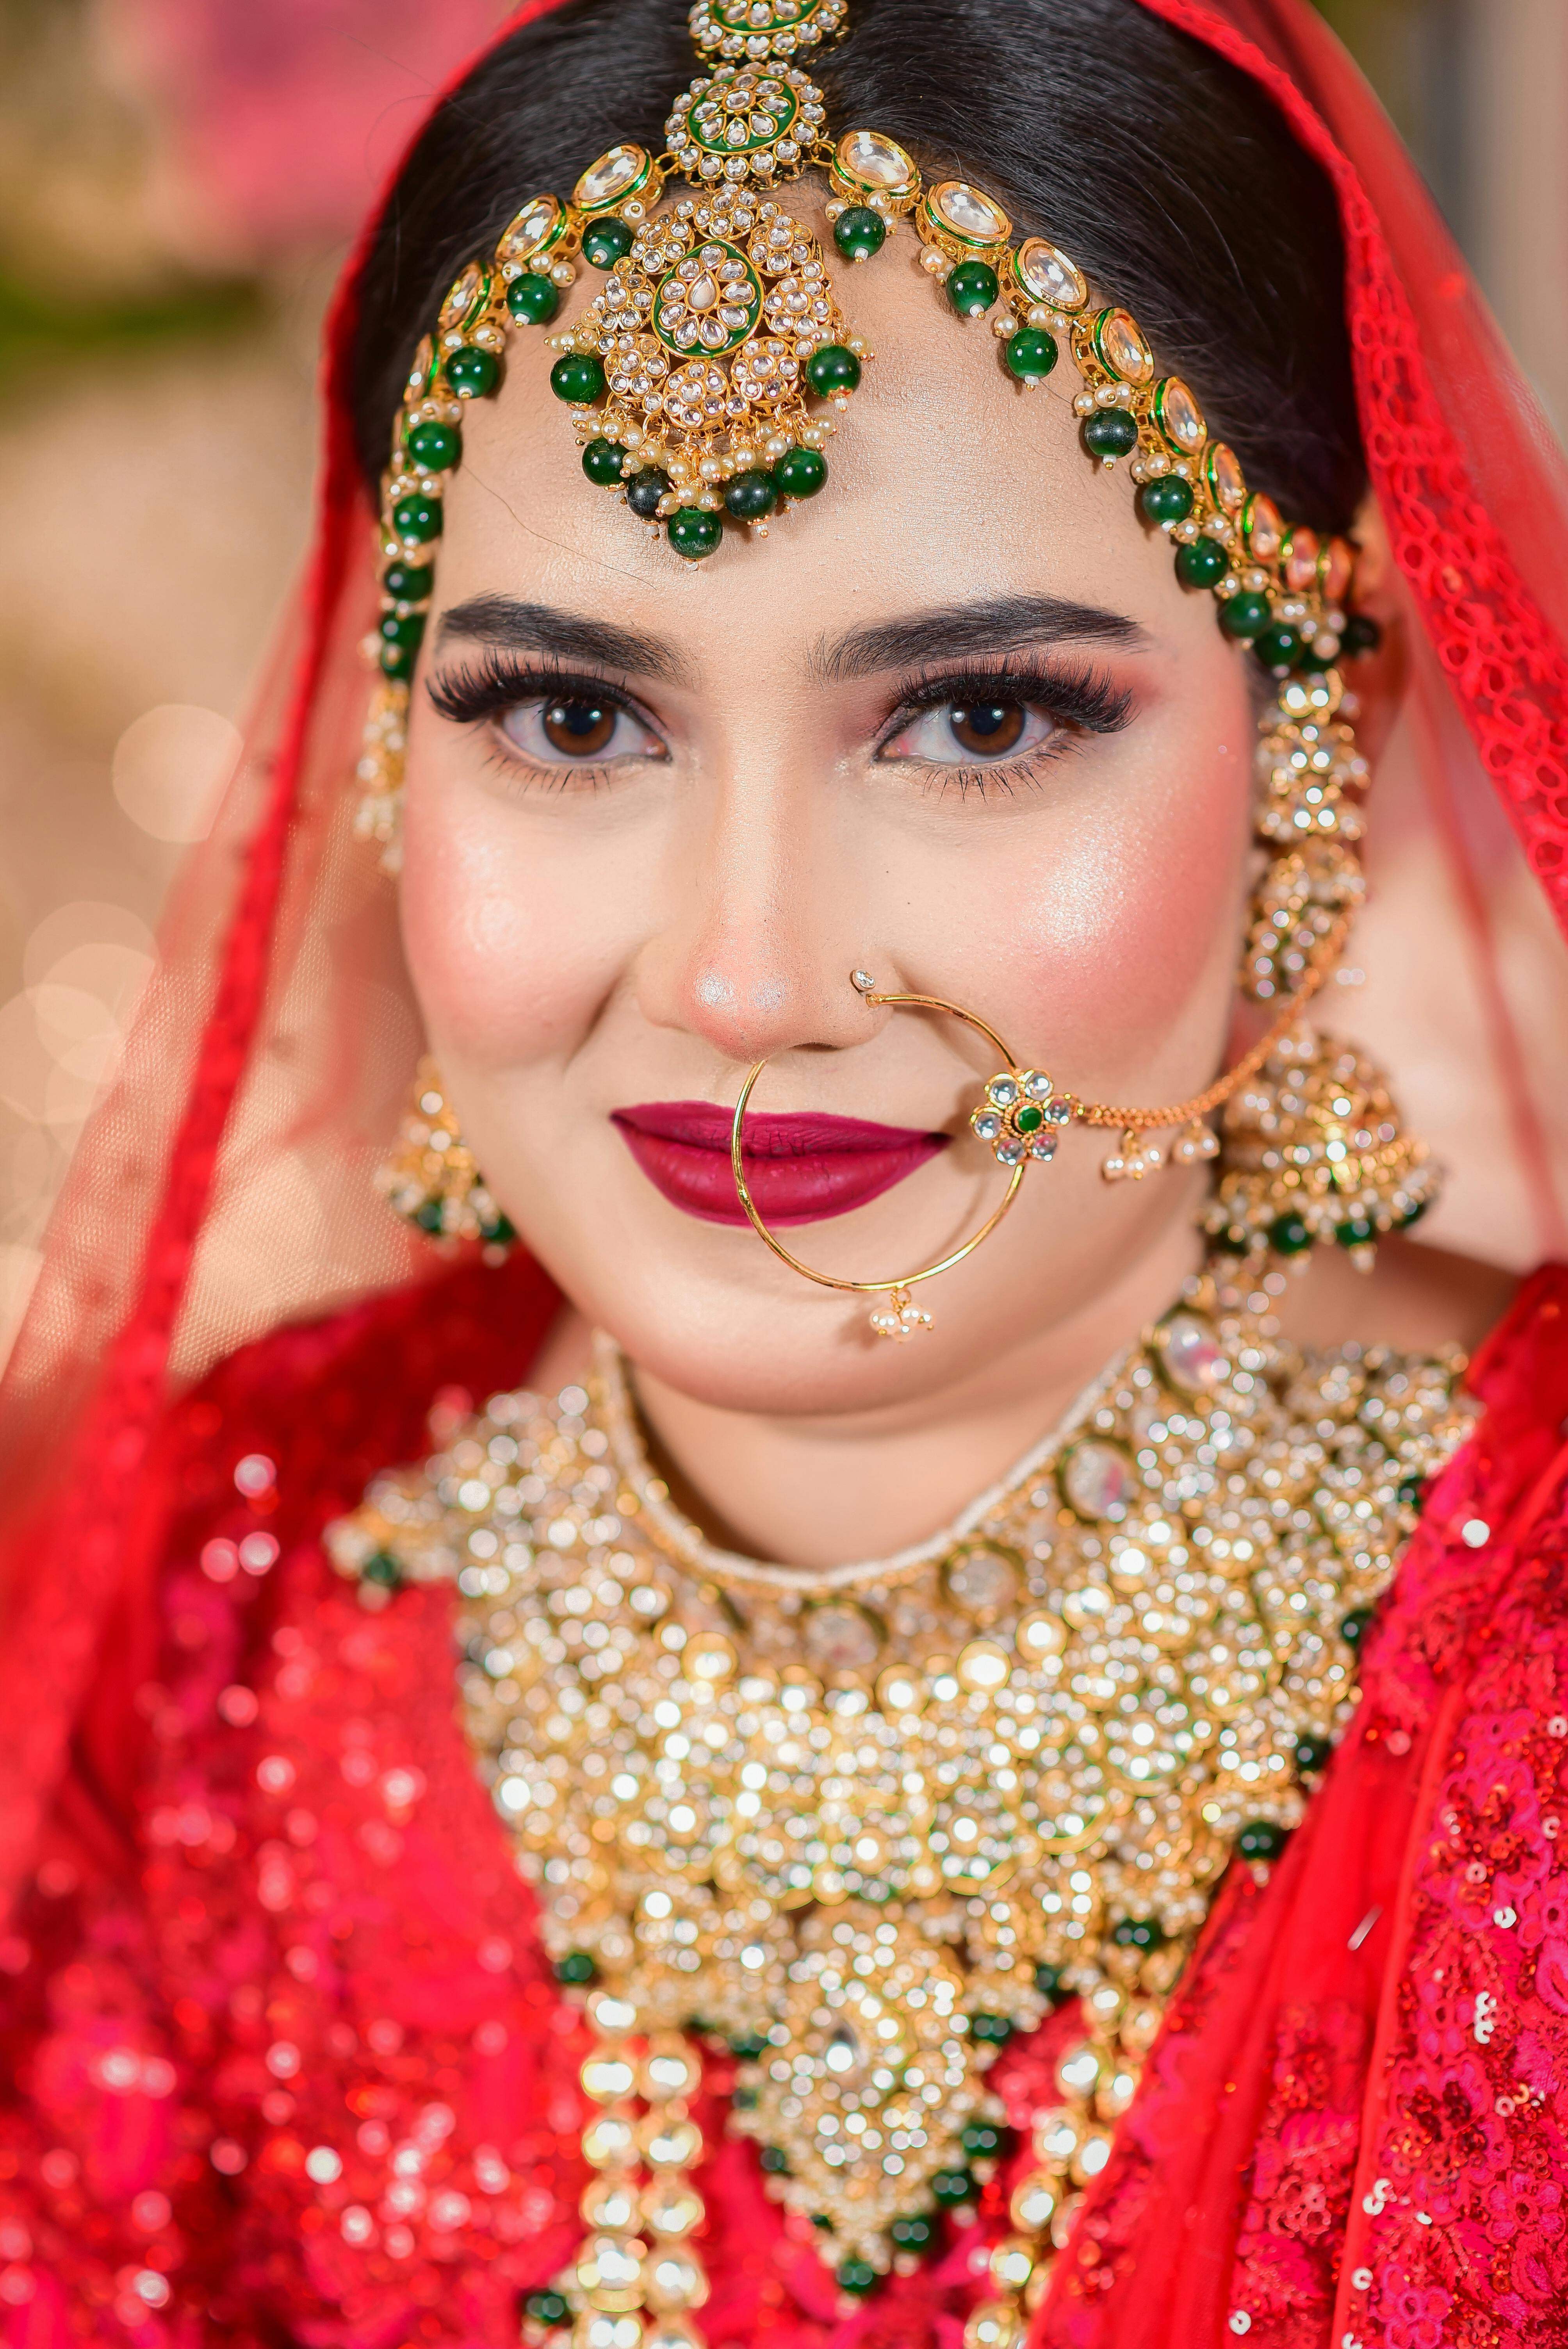 Pin by Kalpana Pun on Beautiful Brides,Wedding Lahnga,Sari n more!!!! |  Indian bride photography poses, Indian wedding photography poses, Bride  photography poses